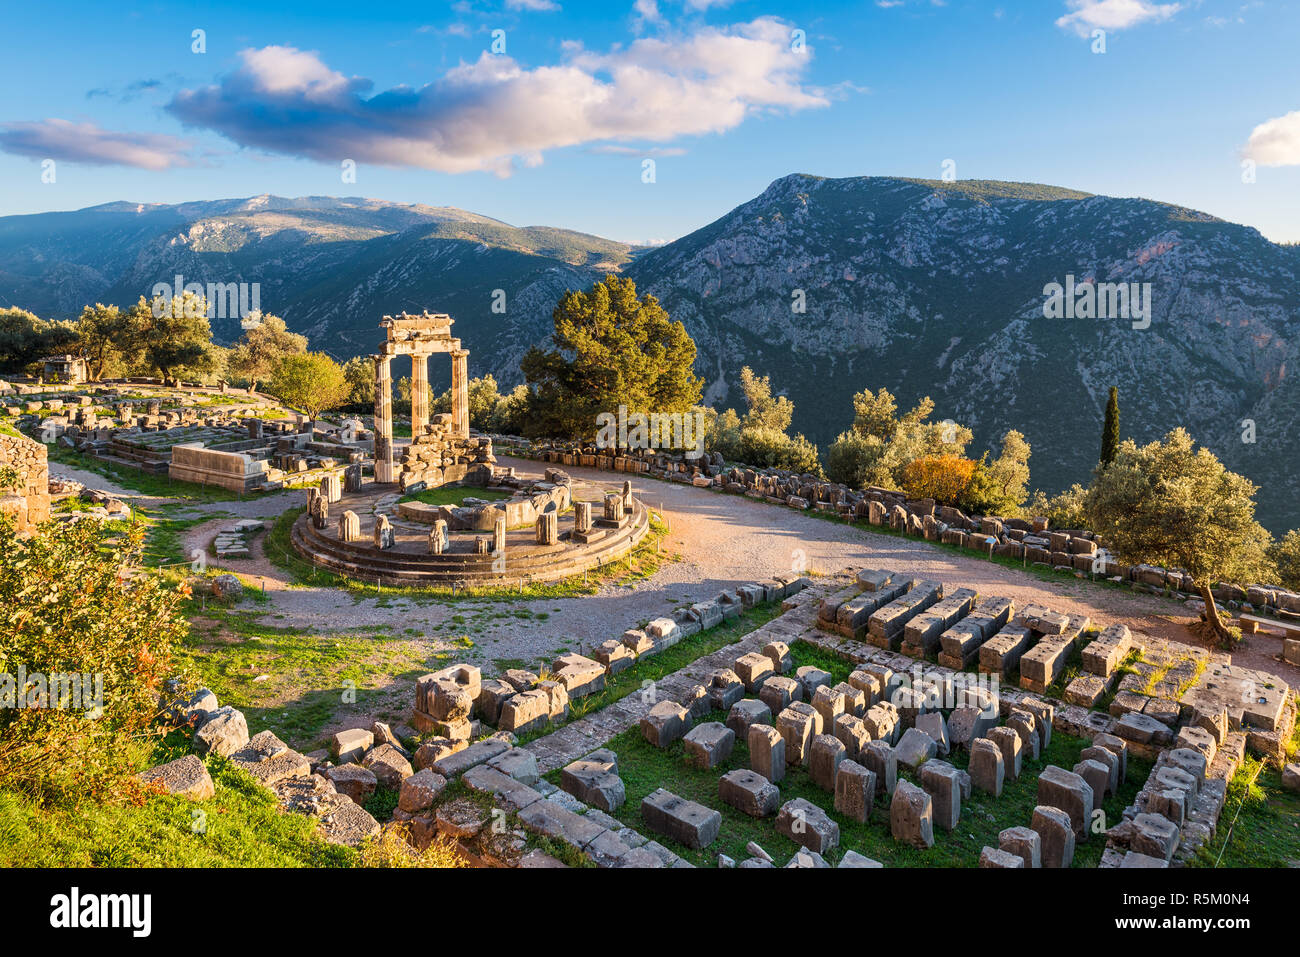 Ruins of the Temple of Athena Pronaia in ancient Delphi, Greece Stock Photo